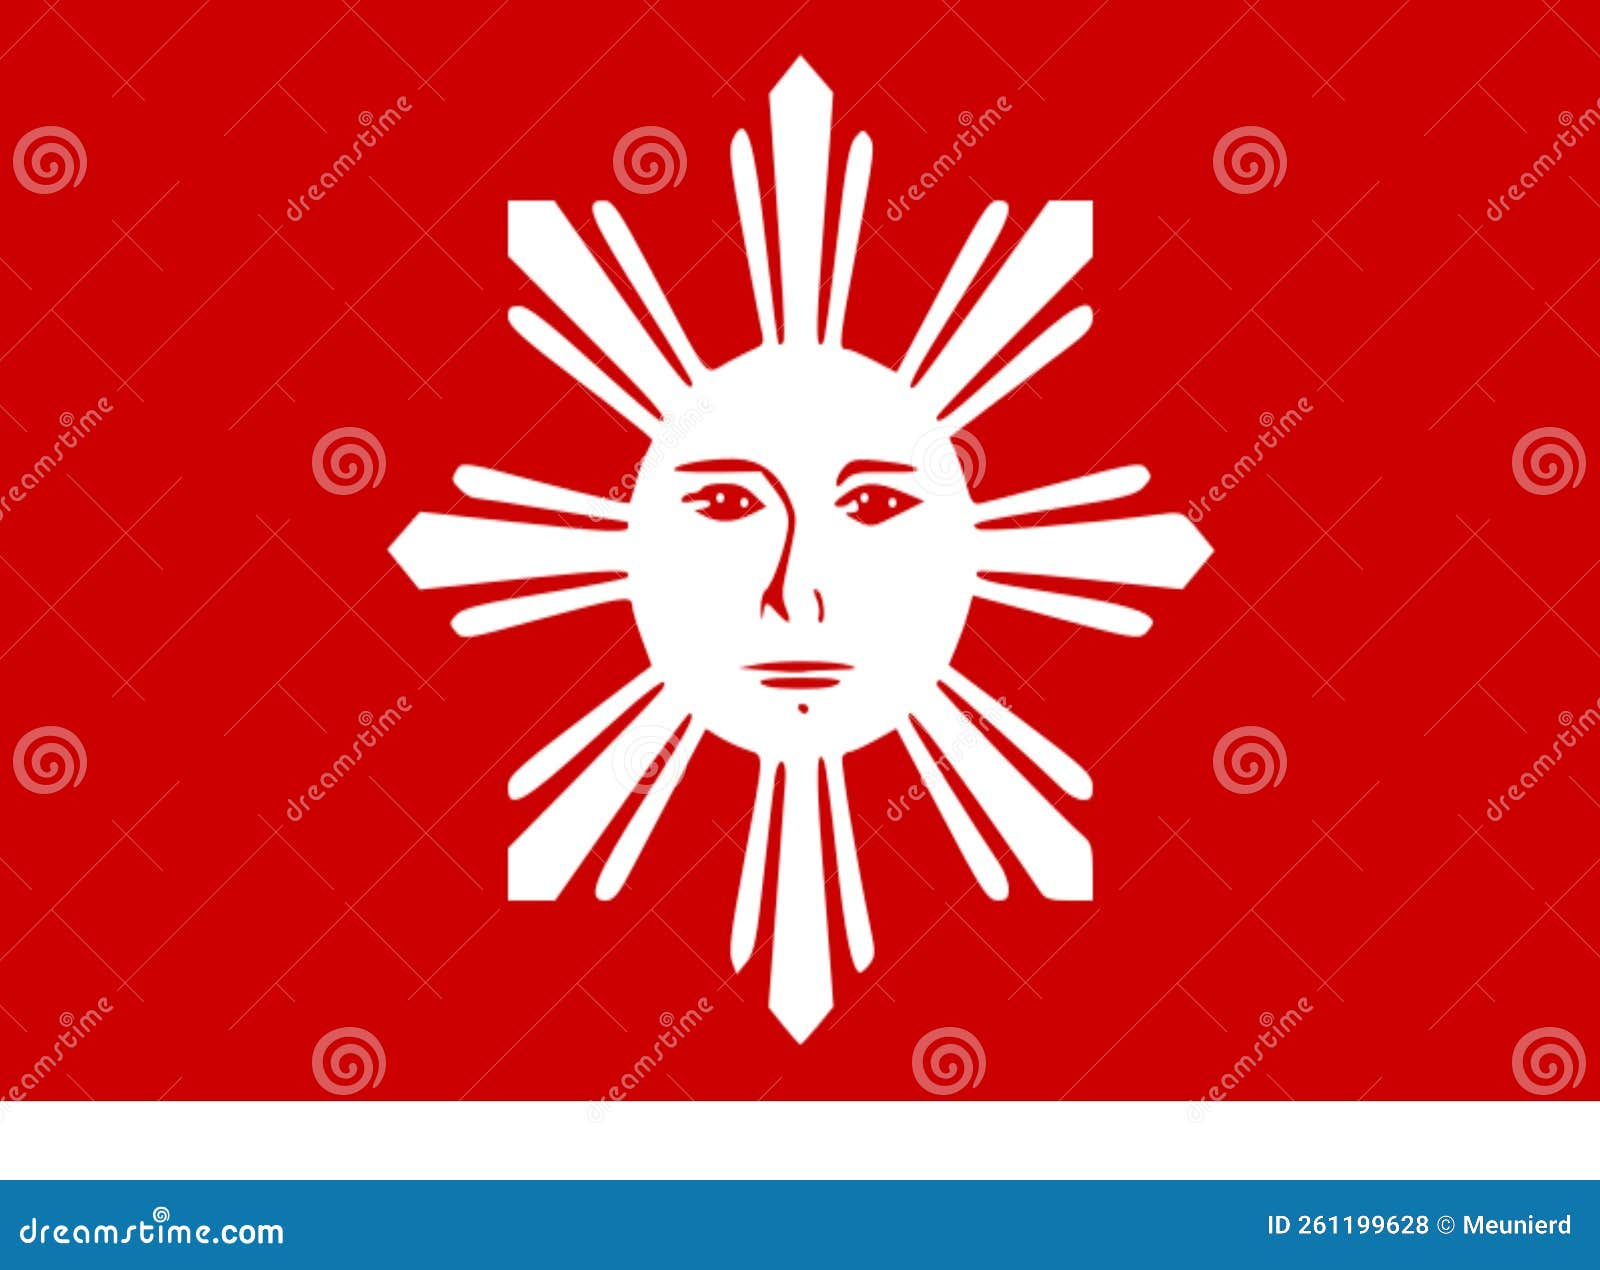 glossy glass flag of tagalog people